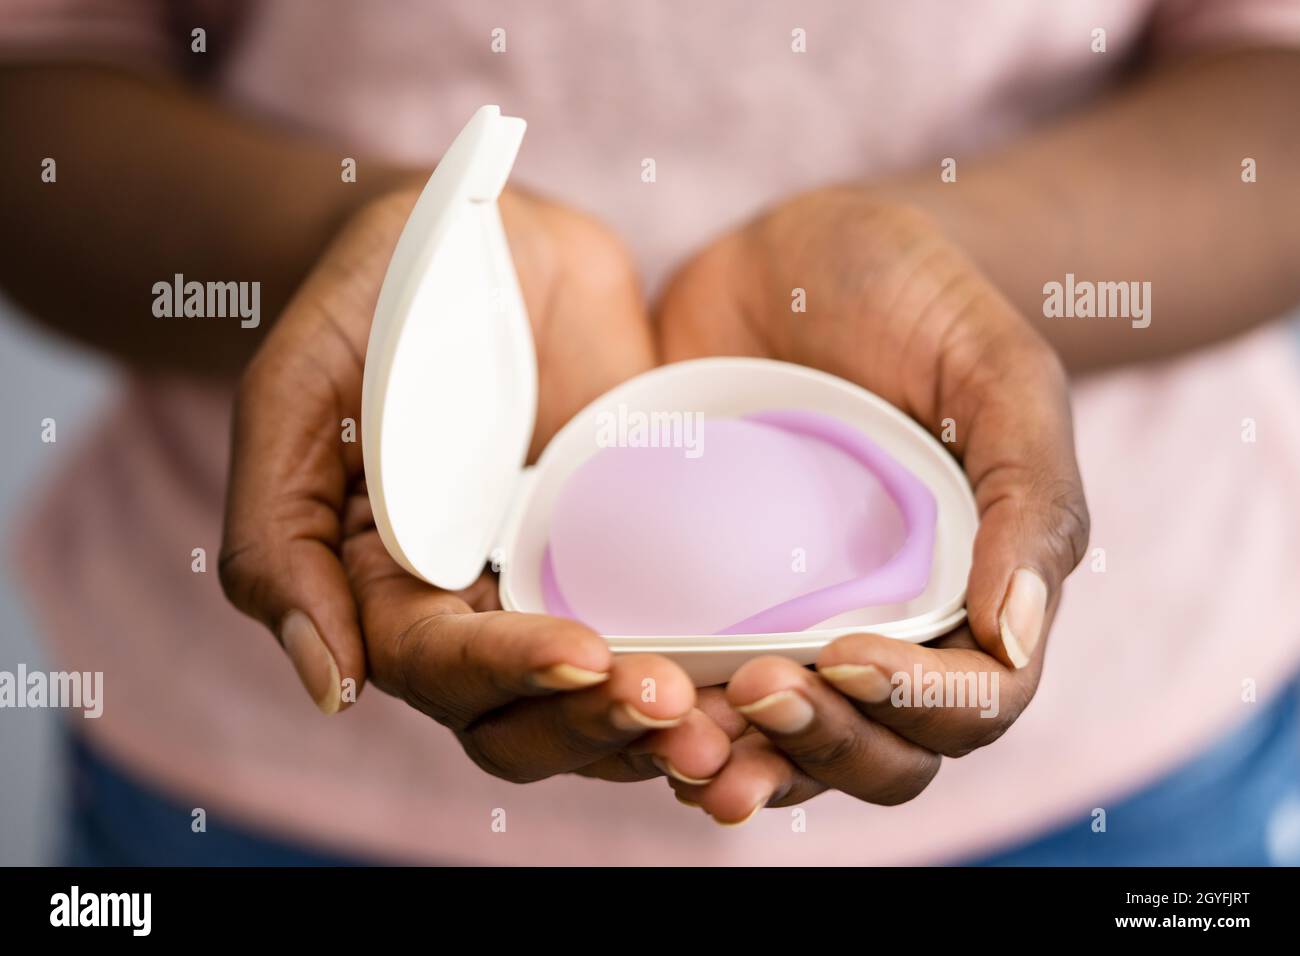 Diaphragm Vaginal Contraceptive Ring Spermicide Contraception Birth Control  Stock Photo by ©AndreyPopov 508492742